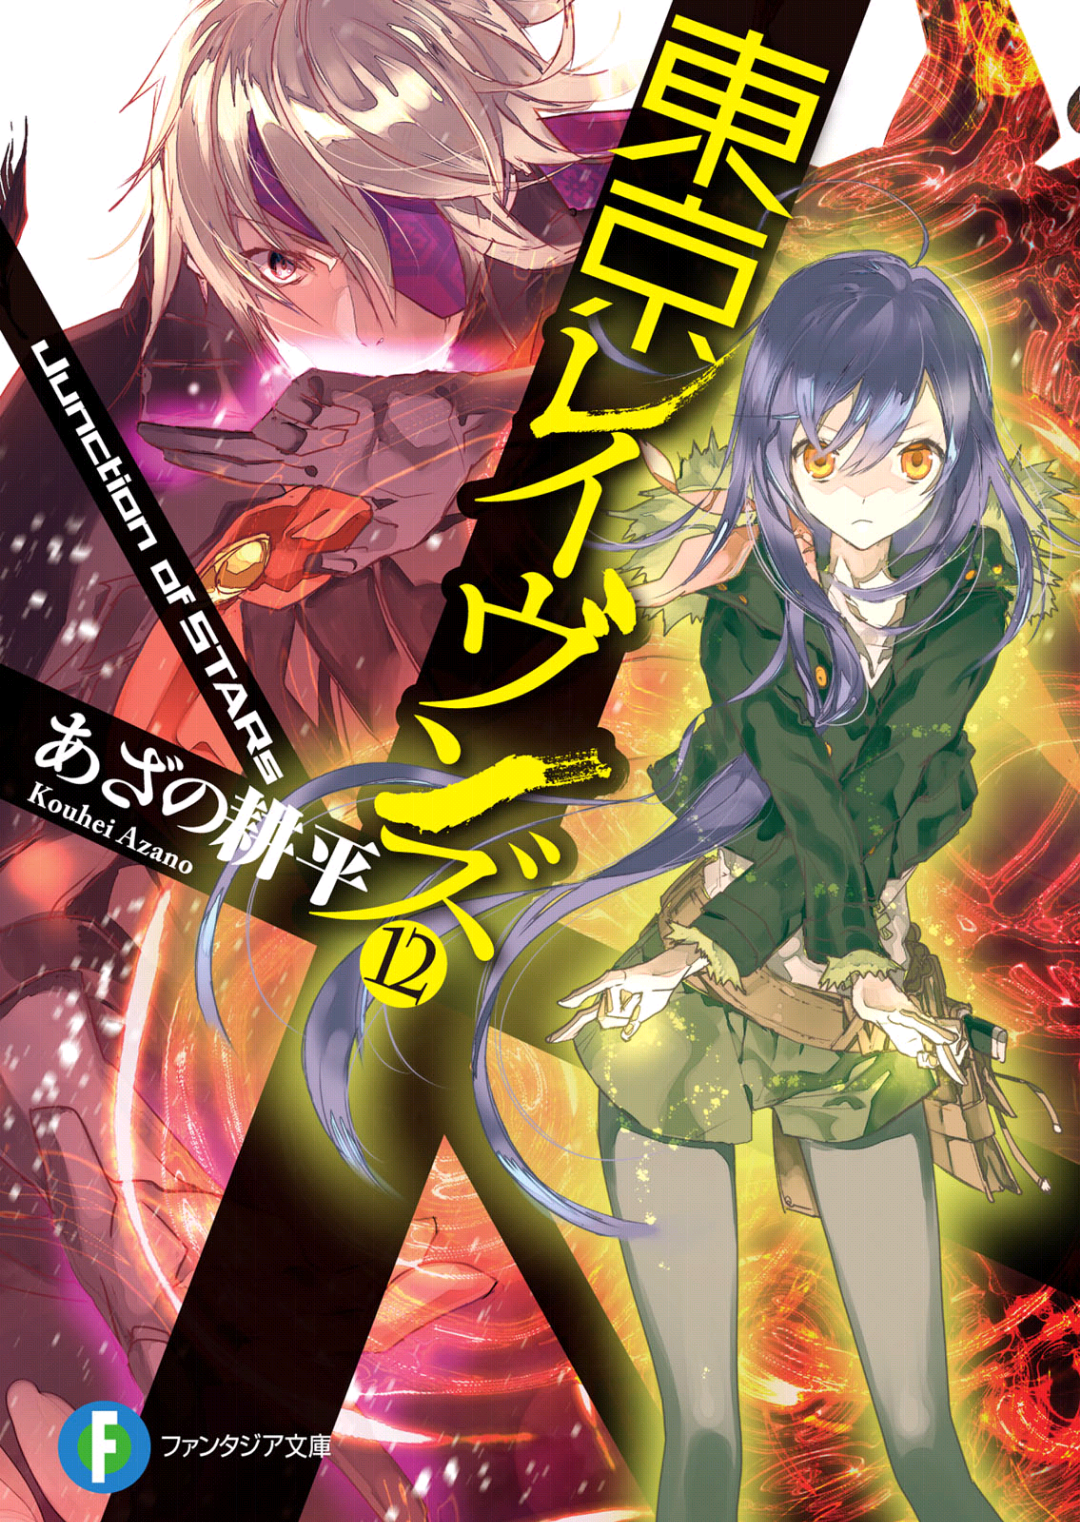 Tsuchimikado Harutora 【Tokyo Ravens】 - Novel Illustrations of 'Tokyo Ravens  Light Novel Volume 12